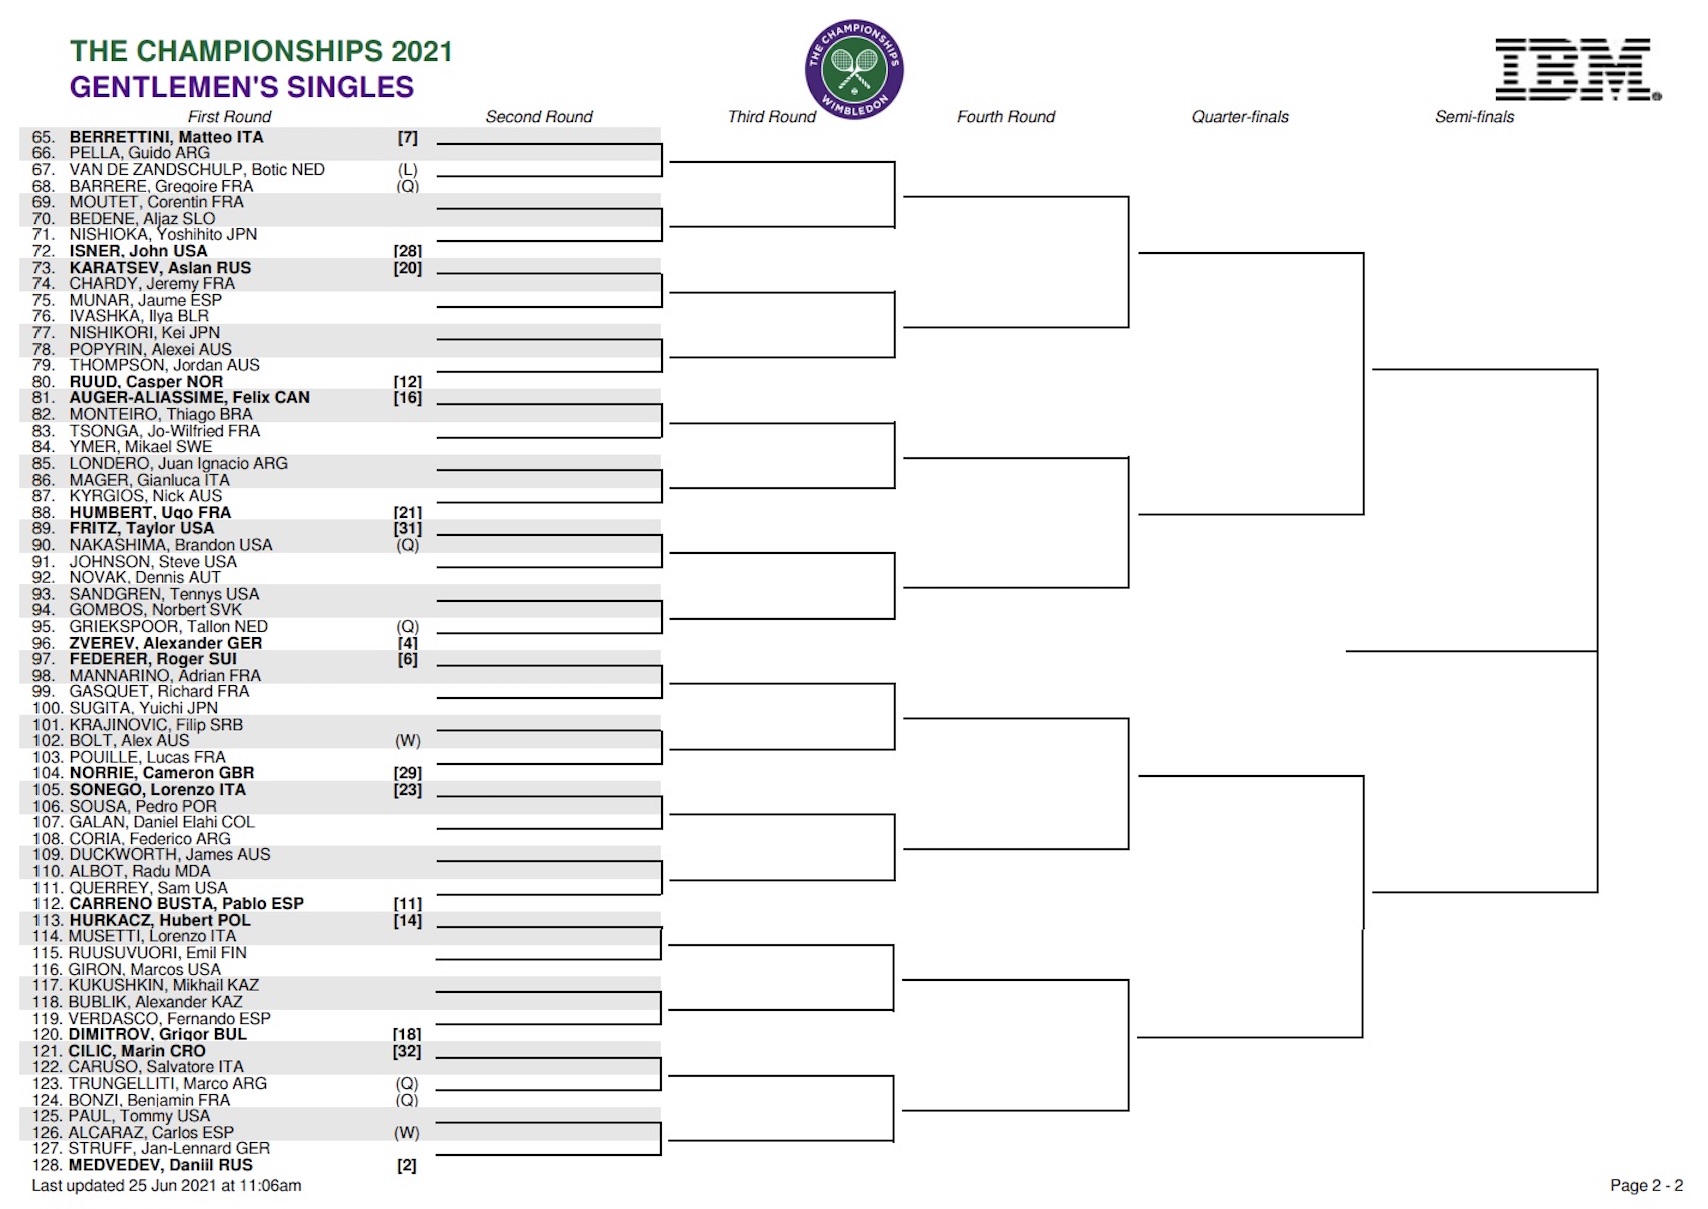 Wimbledon 2021 Men's Singles Draw Bottom Half